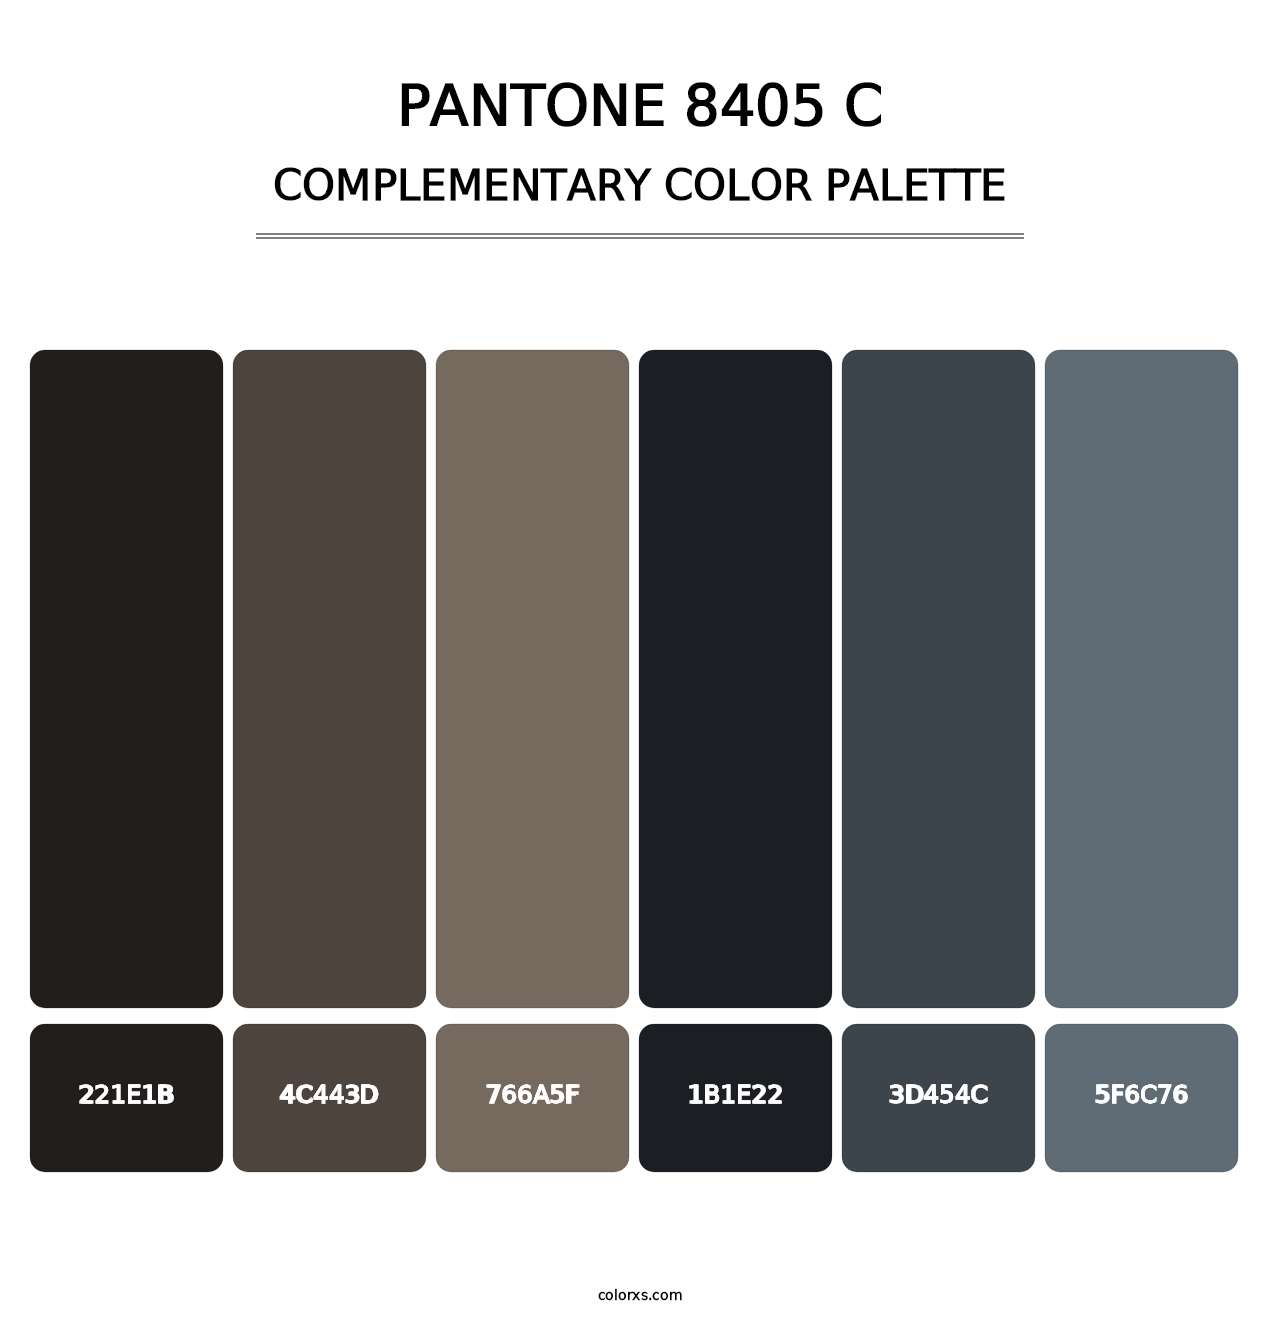 PANTONE 8405 C - Complementary Color Palette